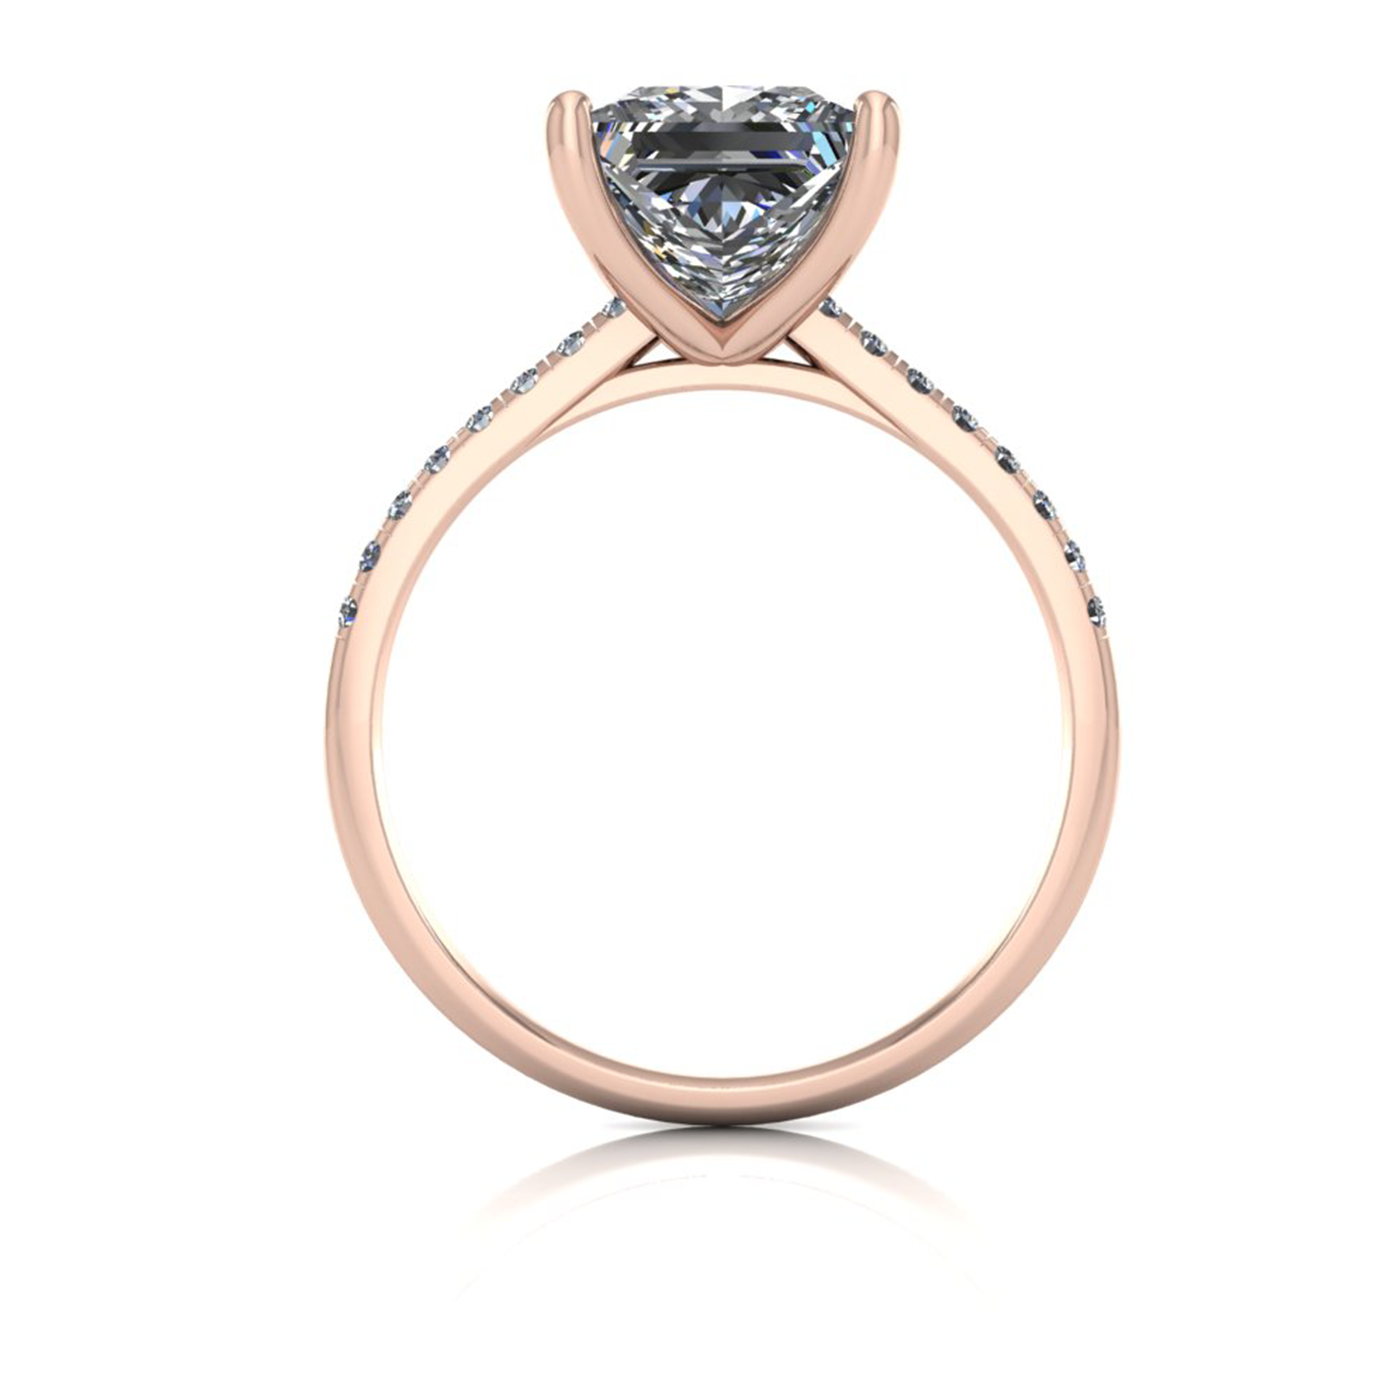 18k rose gold  2,50 ct 4 prongs princess cut diamond engagement ring with whisper thin pavÉ set band